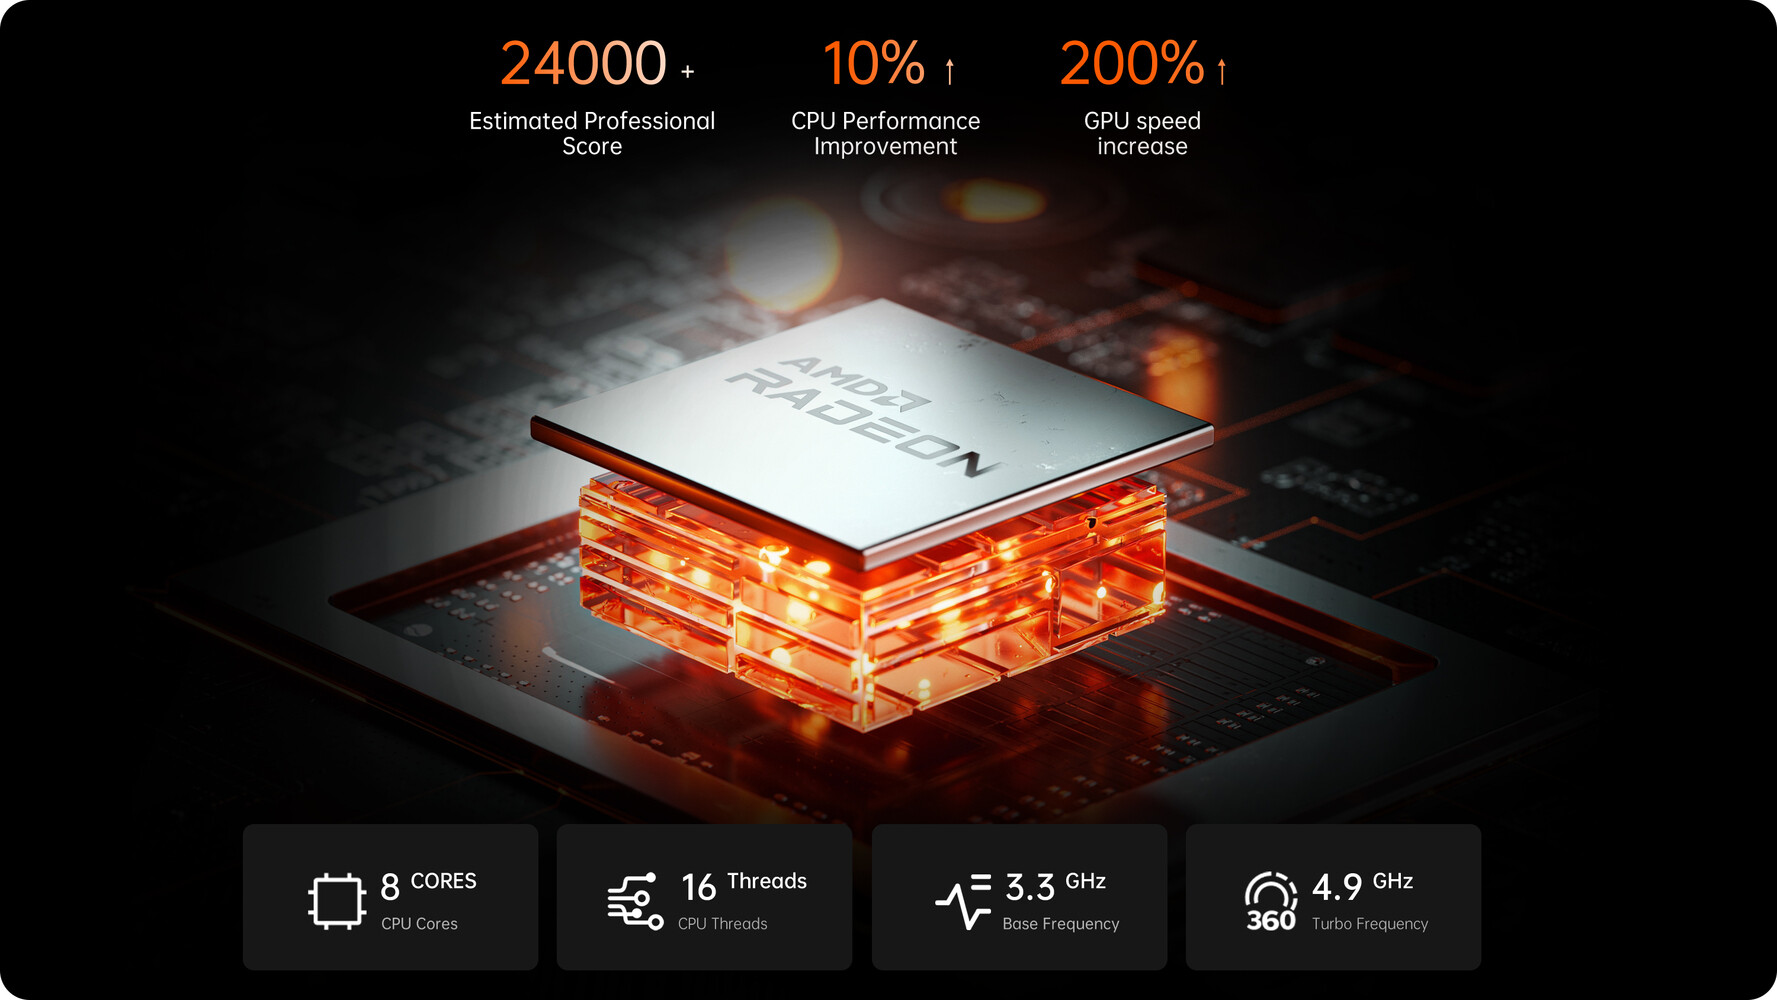 Minisforum Announces UM690 Mini-PC with AMD Ryzen 9 6900HX and